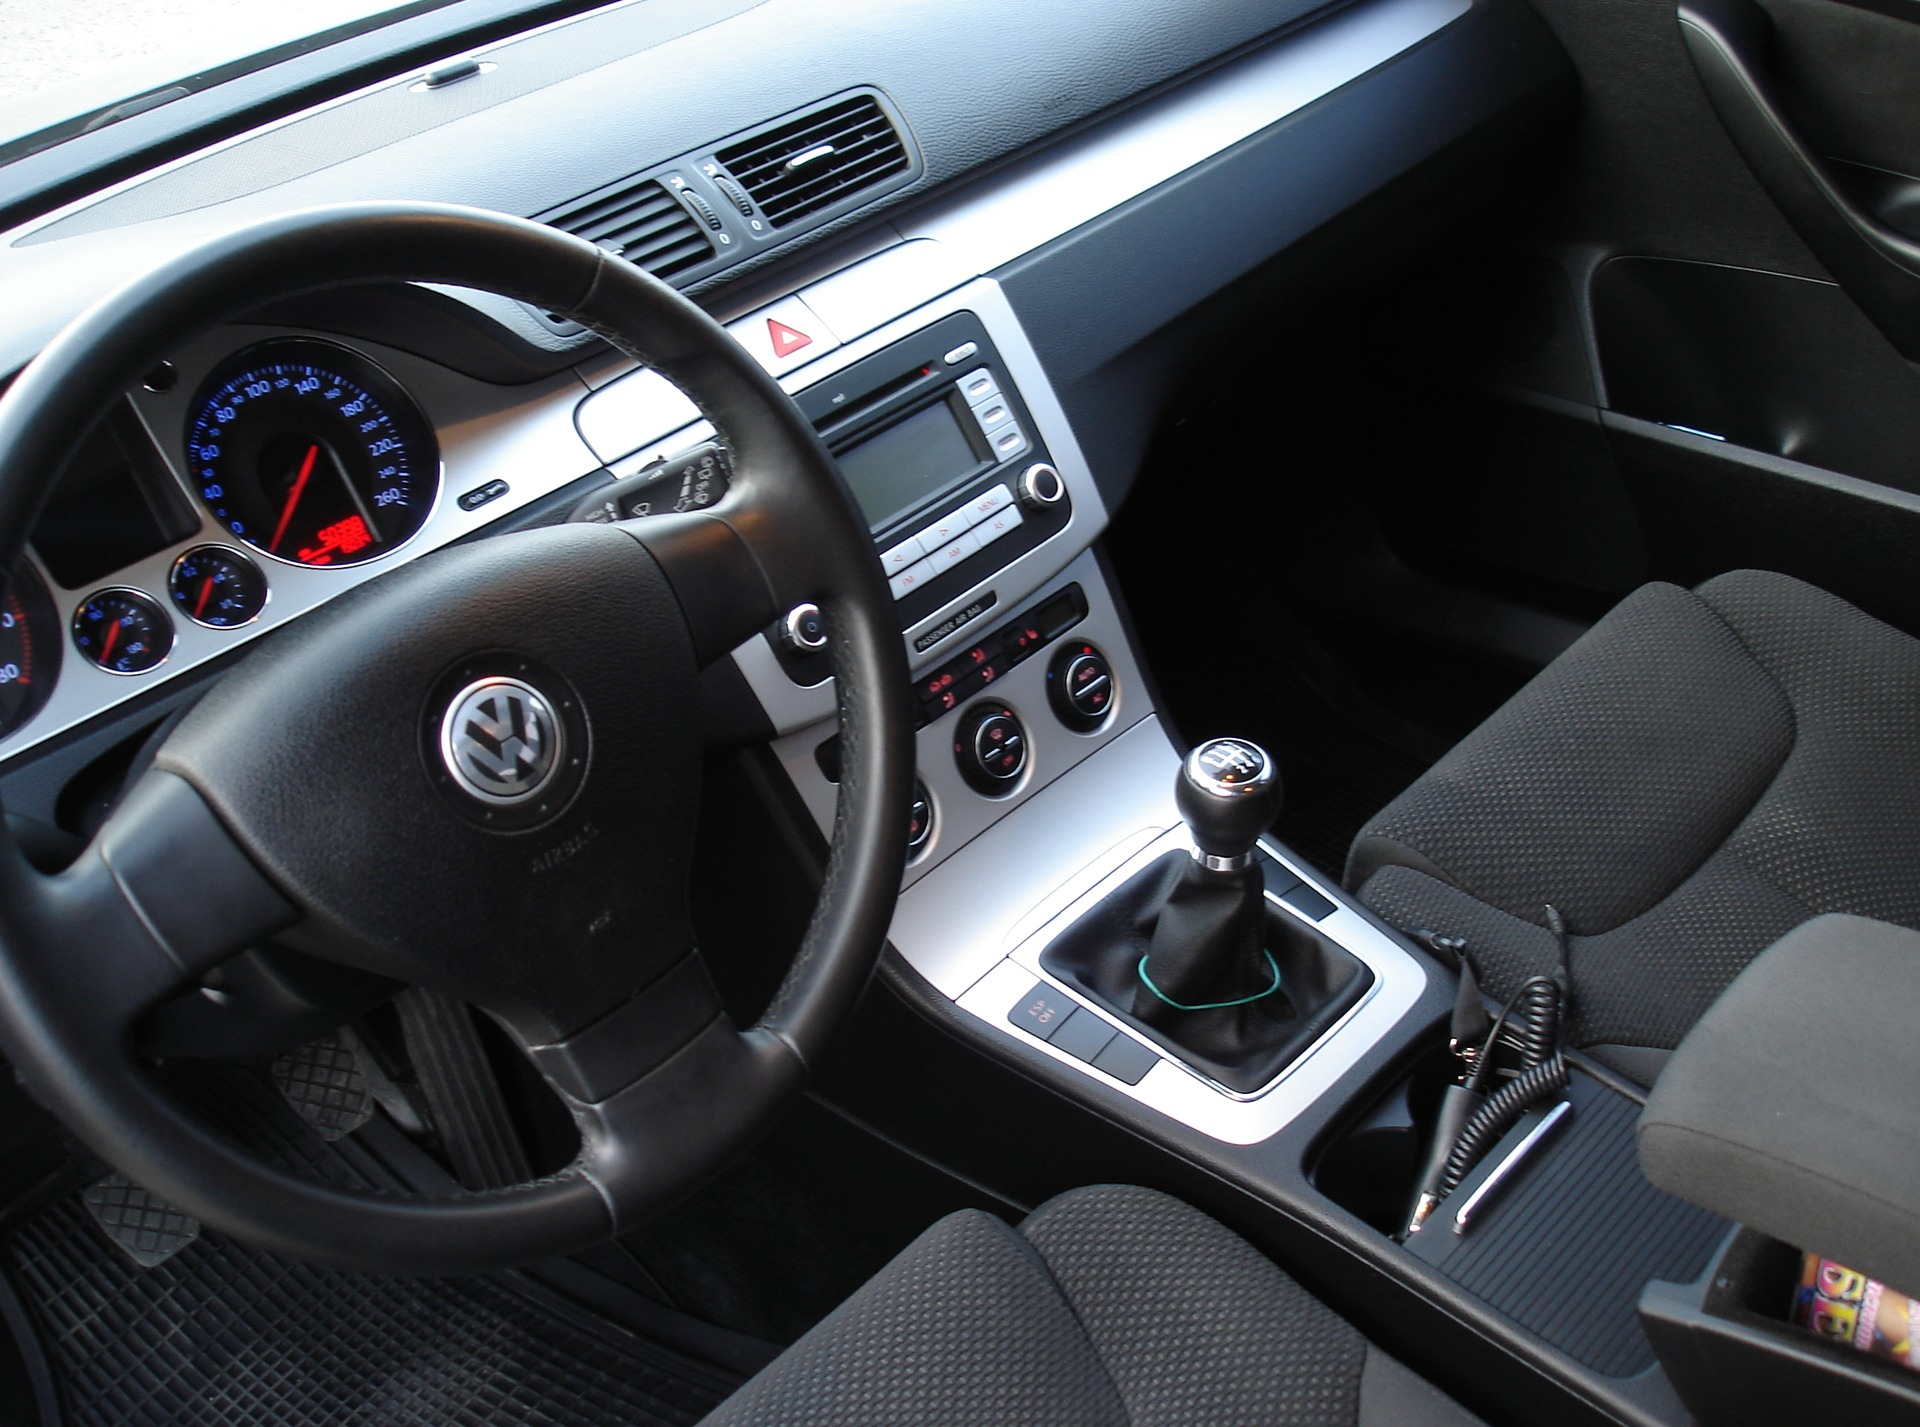 Пассат б6 2008 год. VW Passat b6 Interior. VW Passat b6 салон. Фольксваген Пассат б6 2008 салон. WV Passat b6 салон.